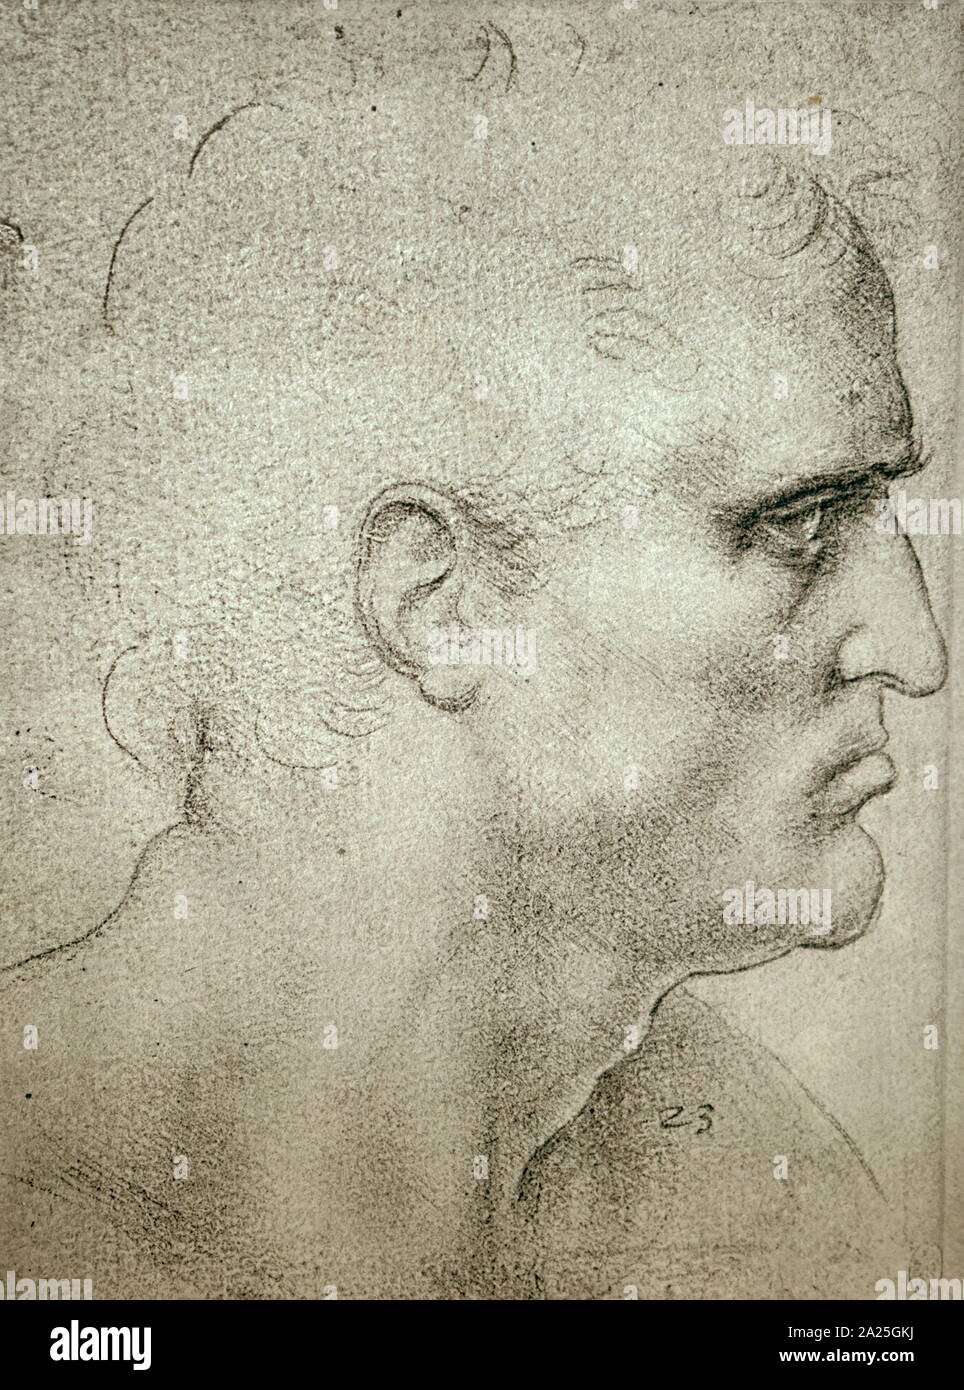 Sketch titled 'The head of St Bartholomew' by Leonardo da Vinci. Leonardo di ser Piero da Vinci (1452-1519) an Italian polymath of the Renaissance. Stock Photo